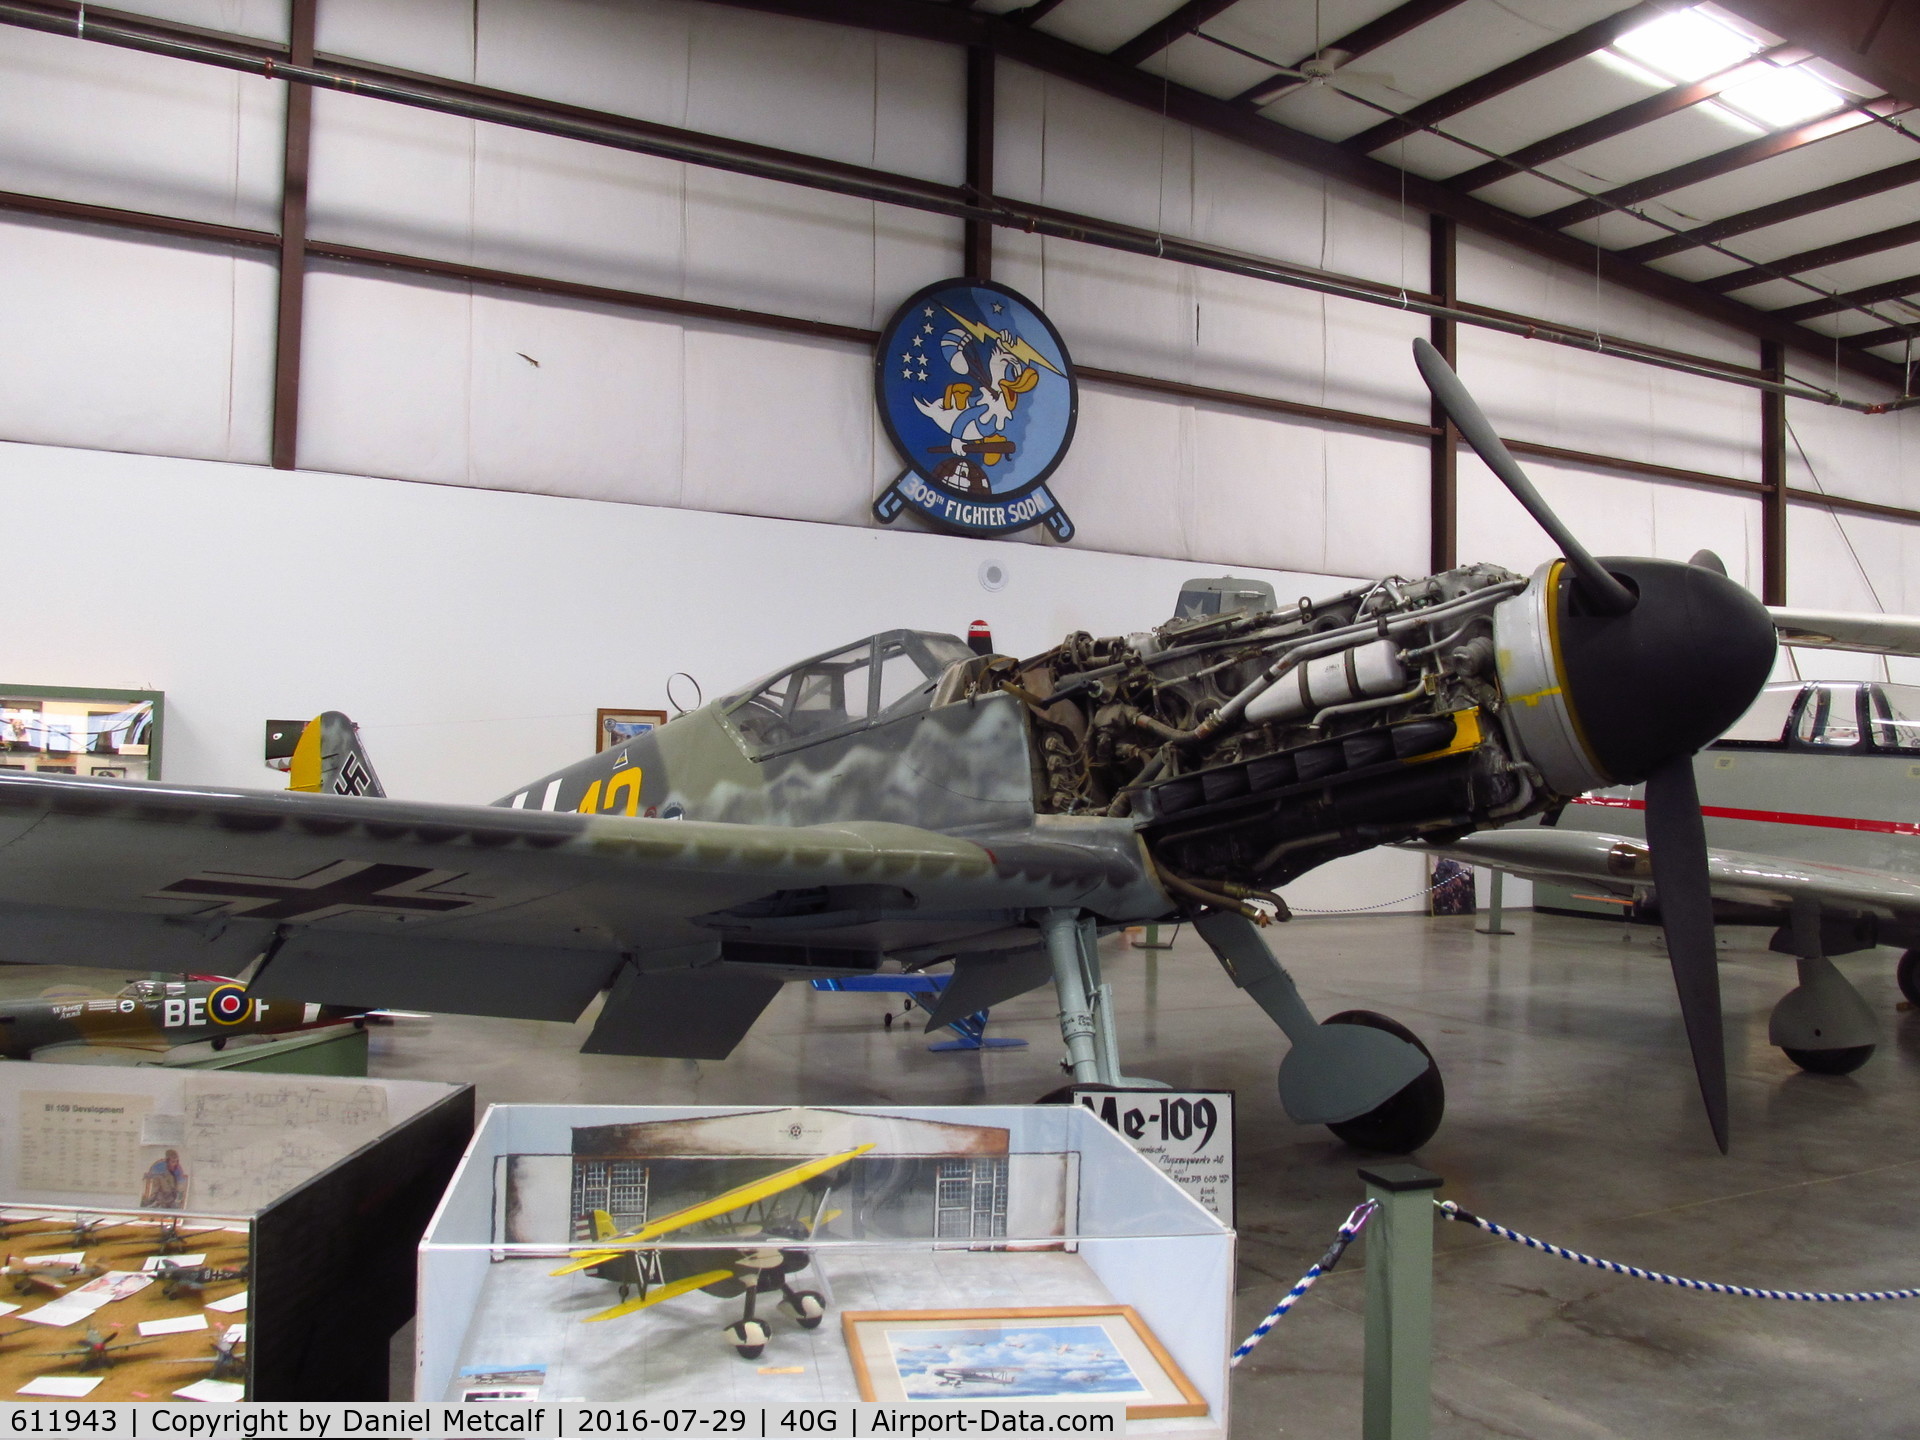 611943, Messerschmitt Bf-109G-10 C/N Not found 611943, Planes of Fame Air Museum (Valle-Williams, AZ Location)